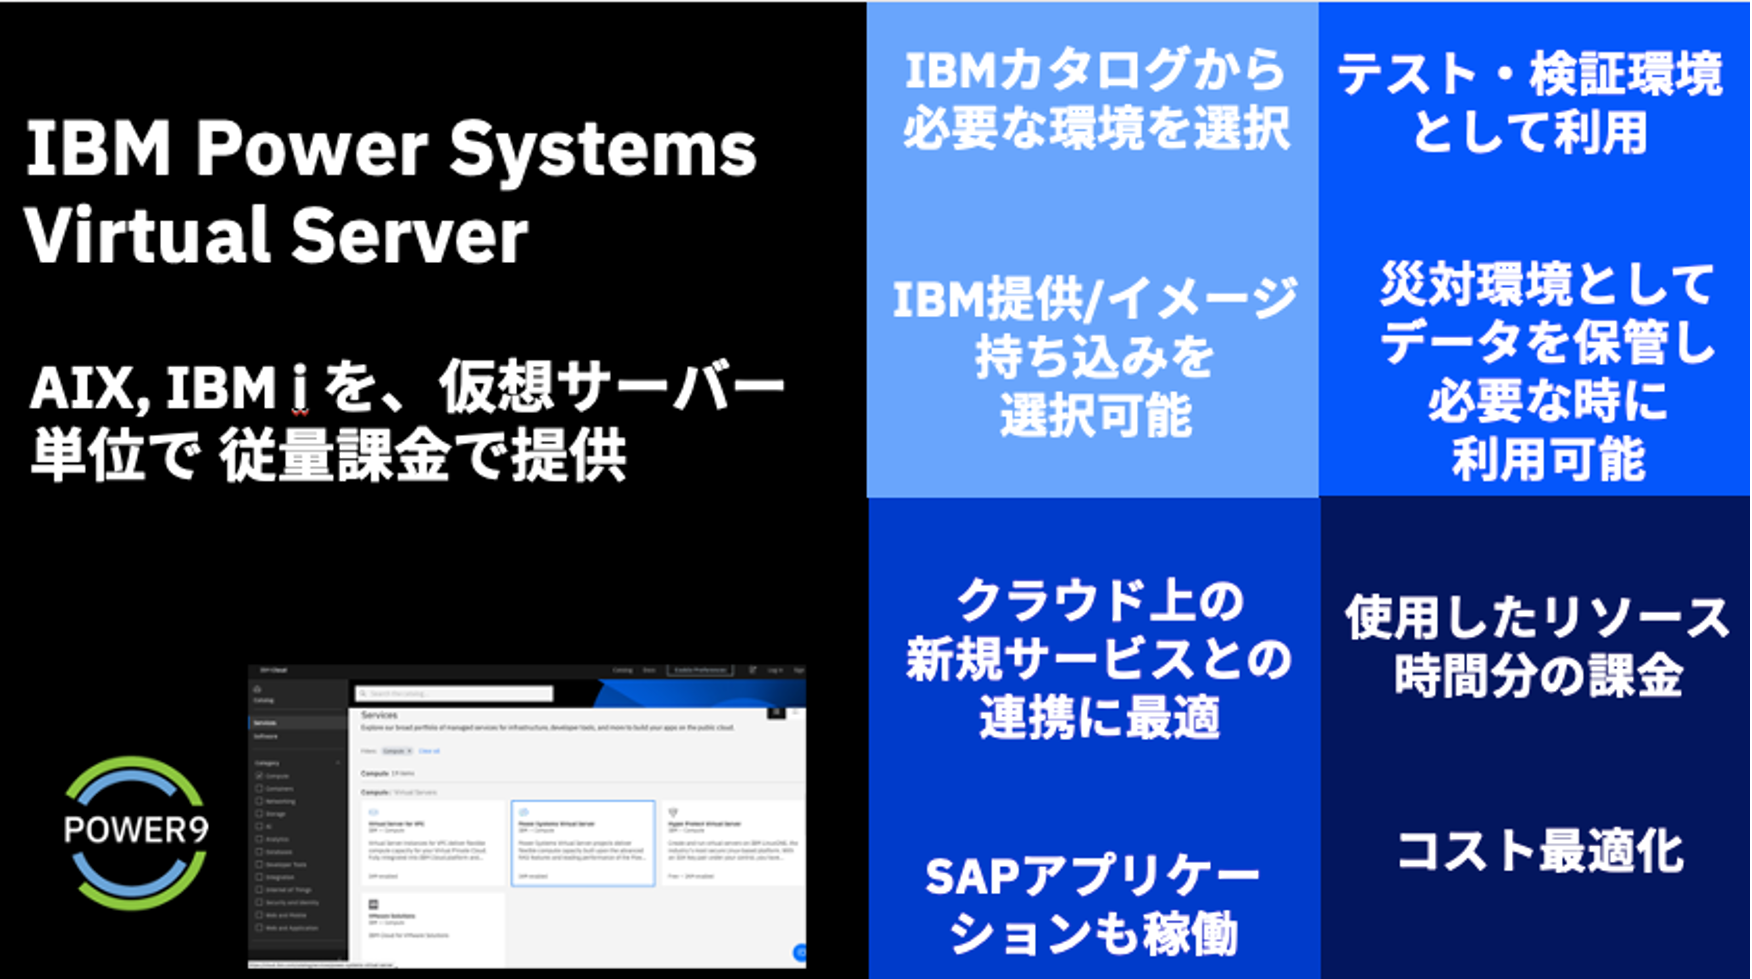 IBM Power Systems Virtual Server 説明図